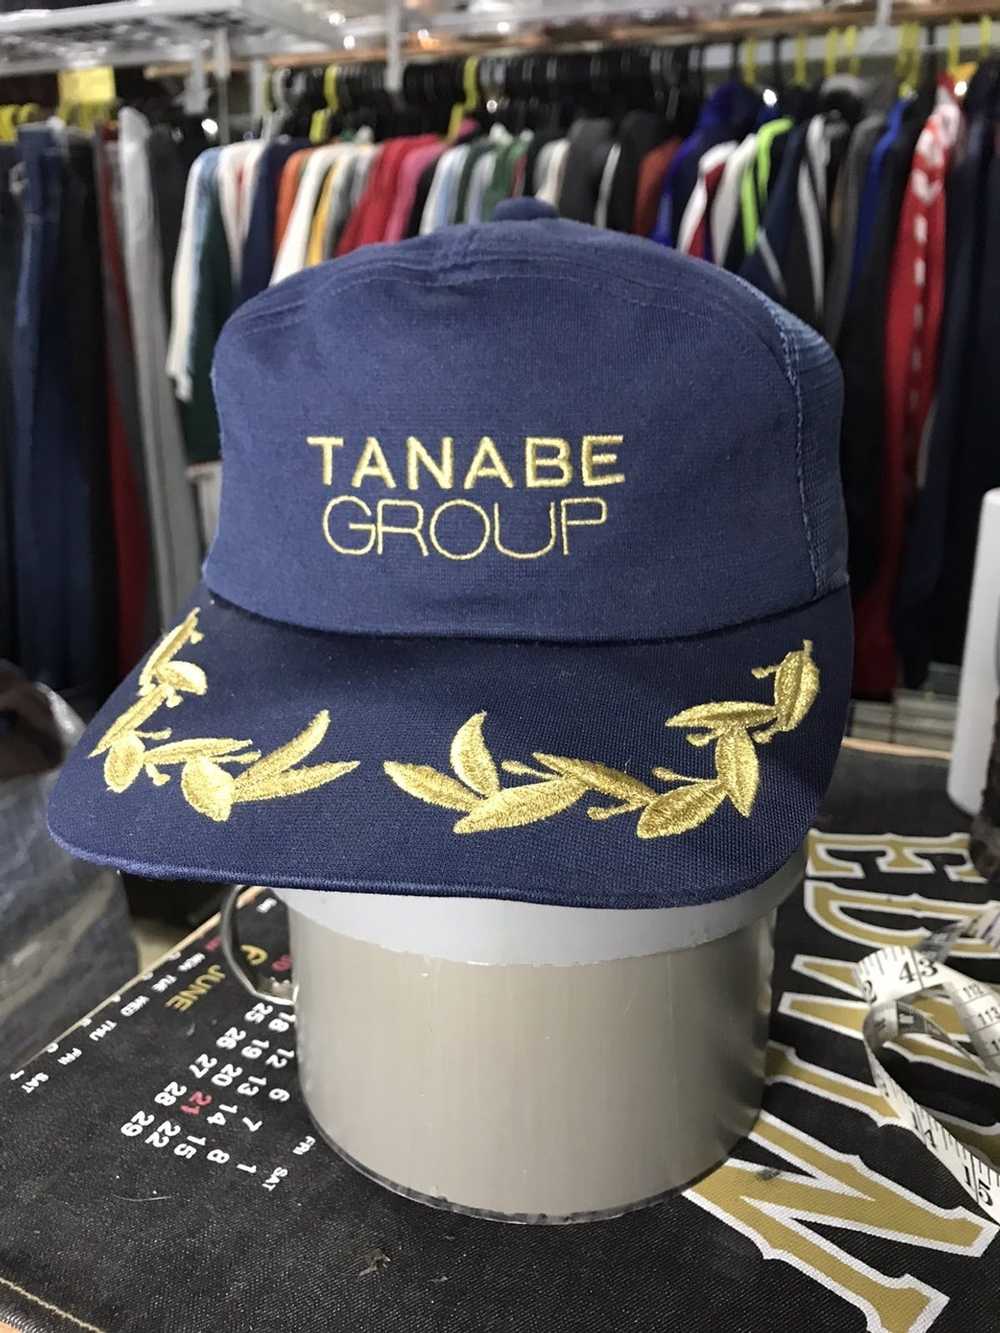 Japanese Brand Tanabe group cap - image 1